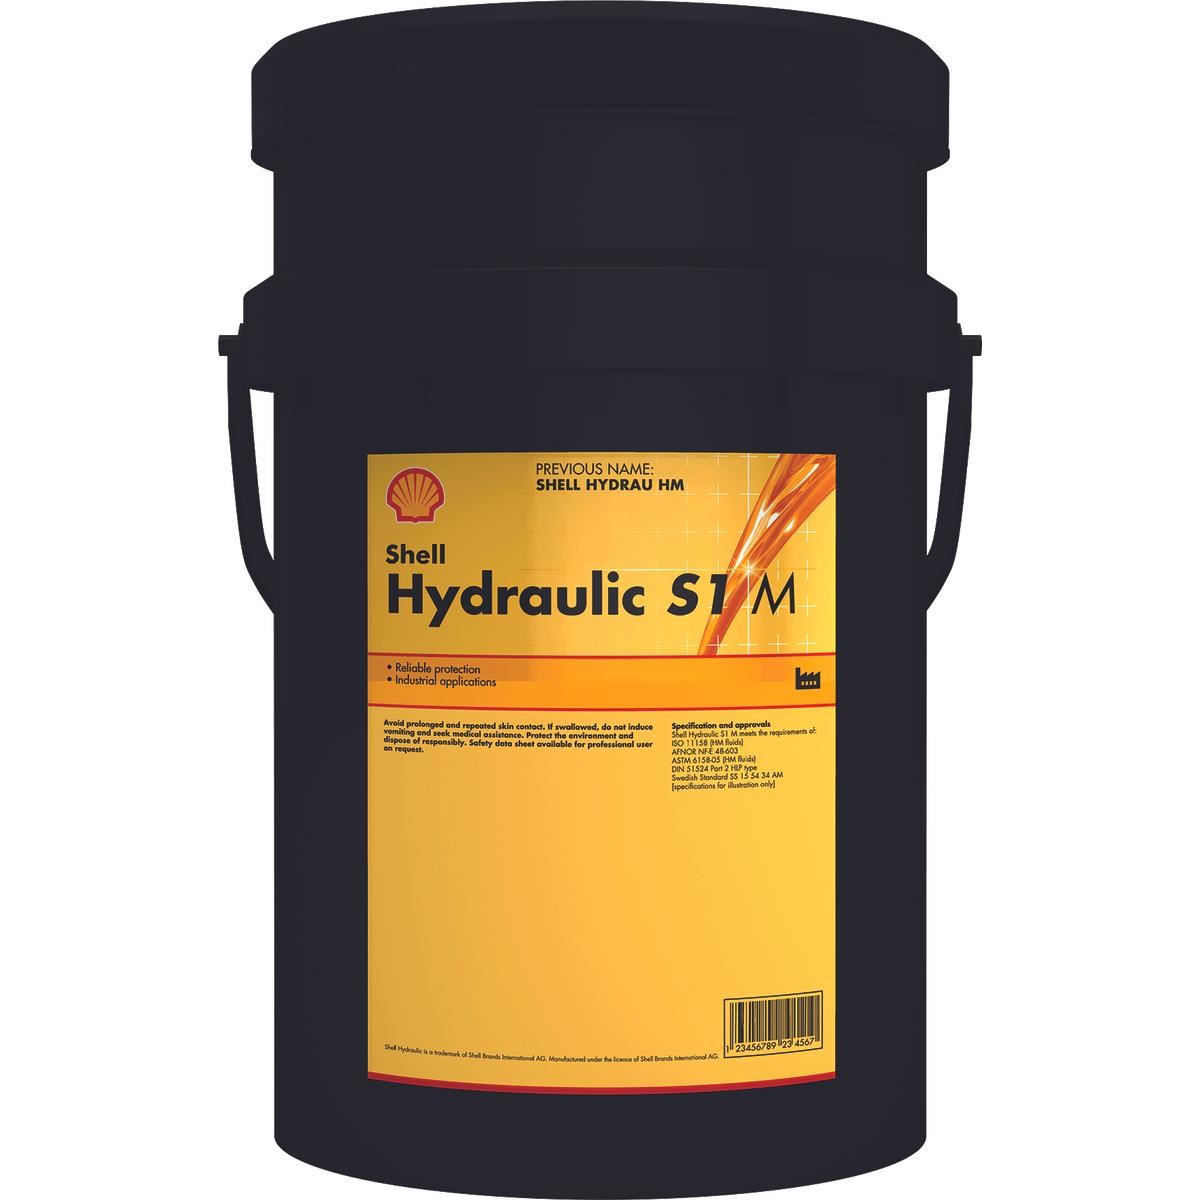 SHELL Hydraulic, S1 M68 Capacity: 20l ISO 11158 HM, DIN 51524-2 HLP Hydraulic fluid 550027168 buy